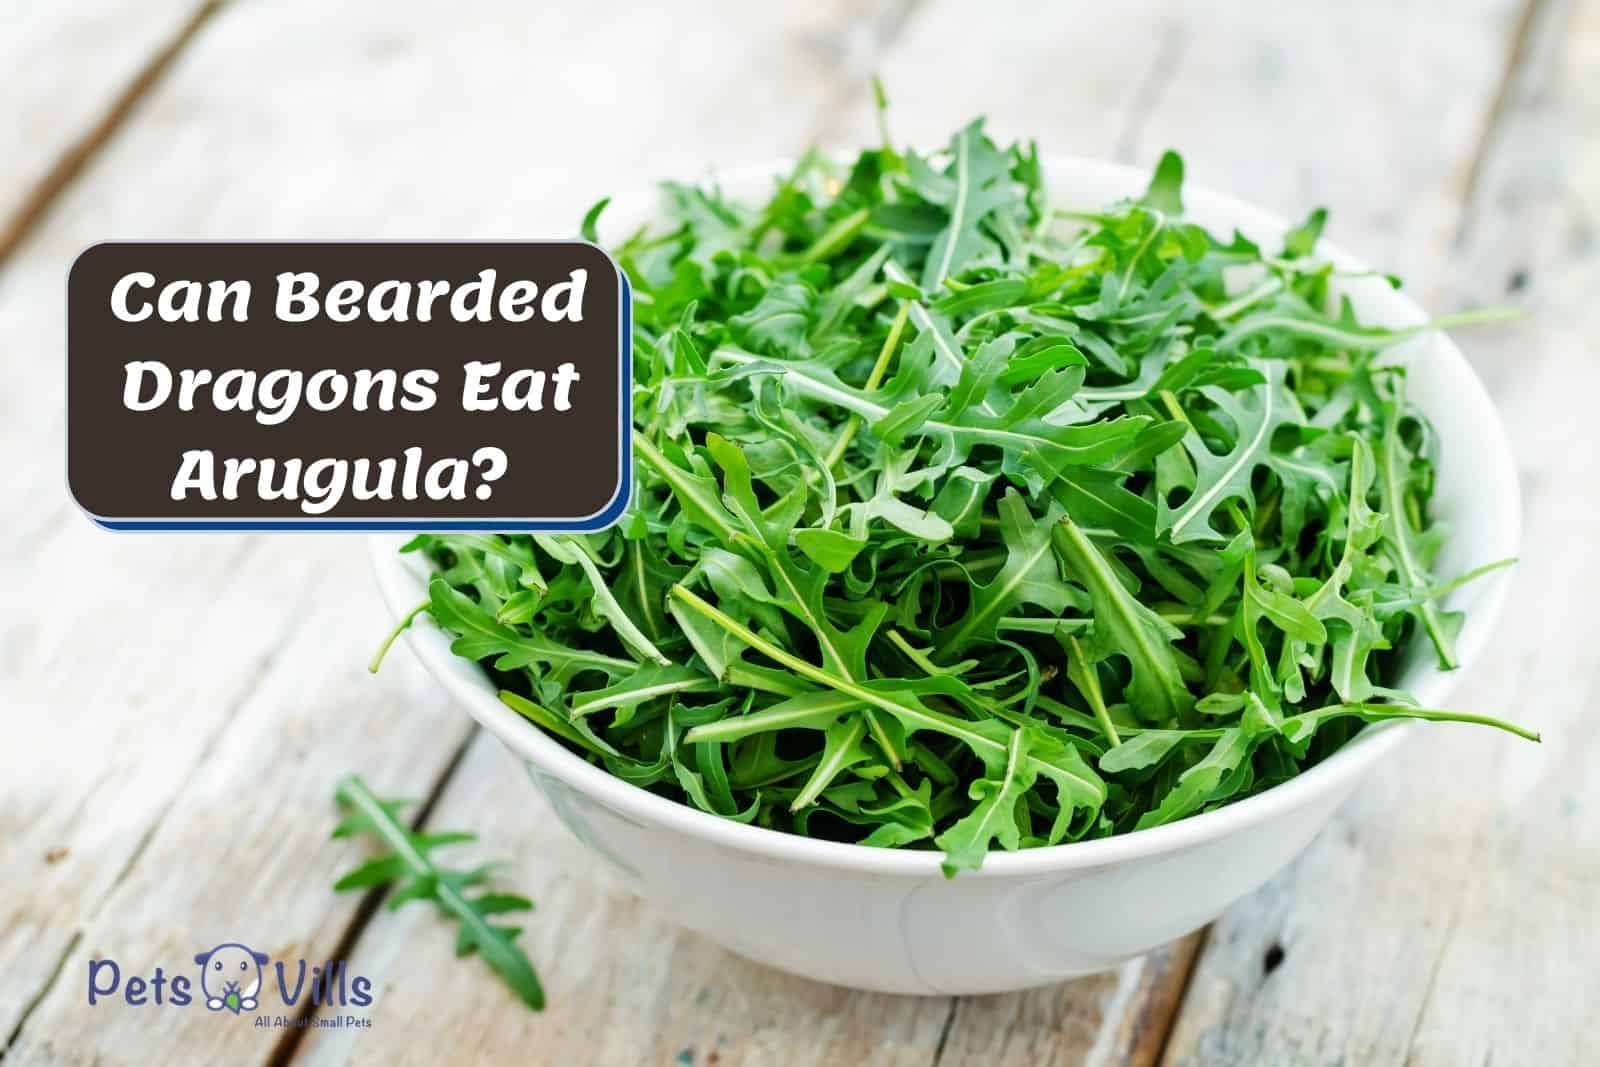 Can Bearded Dragons Eat Arugula?